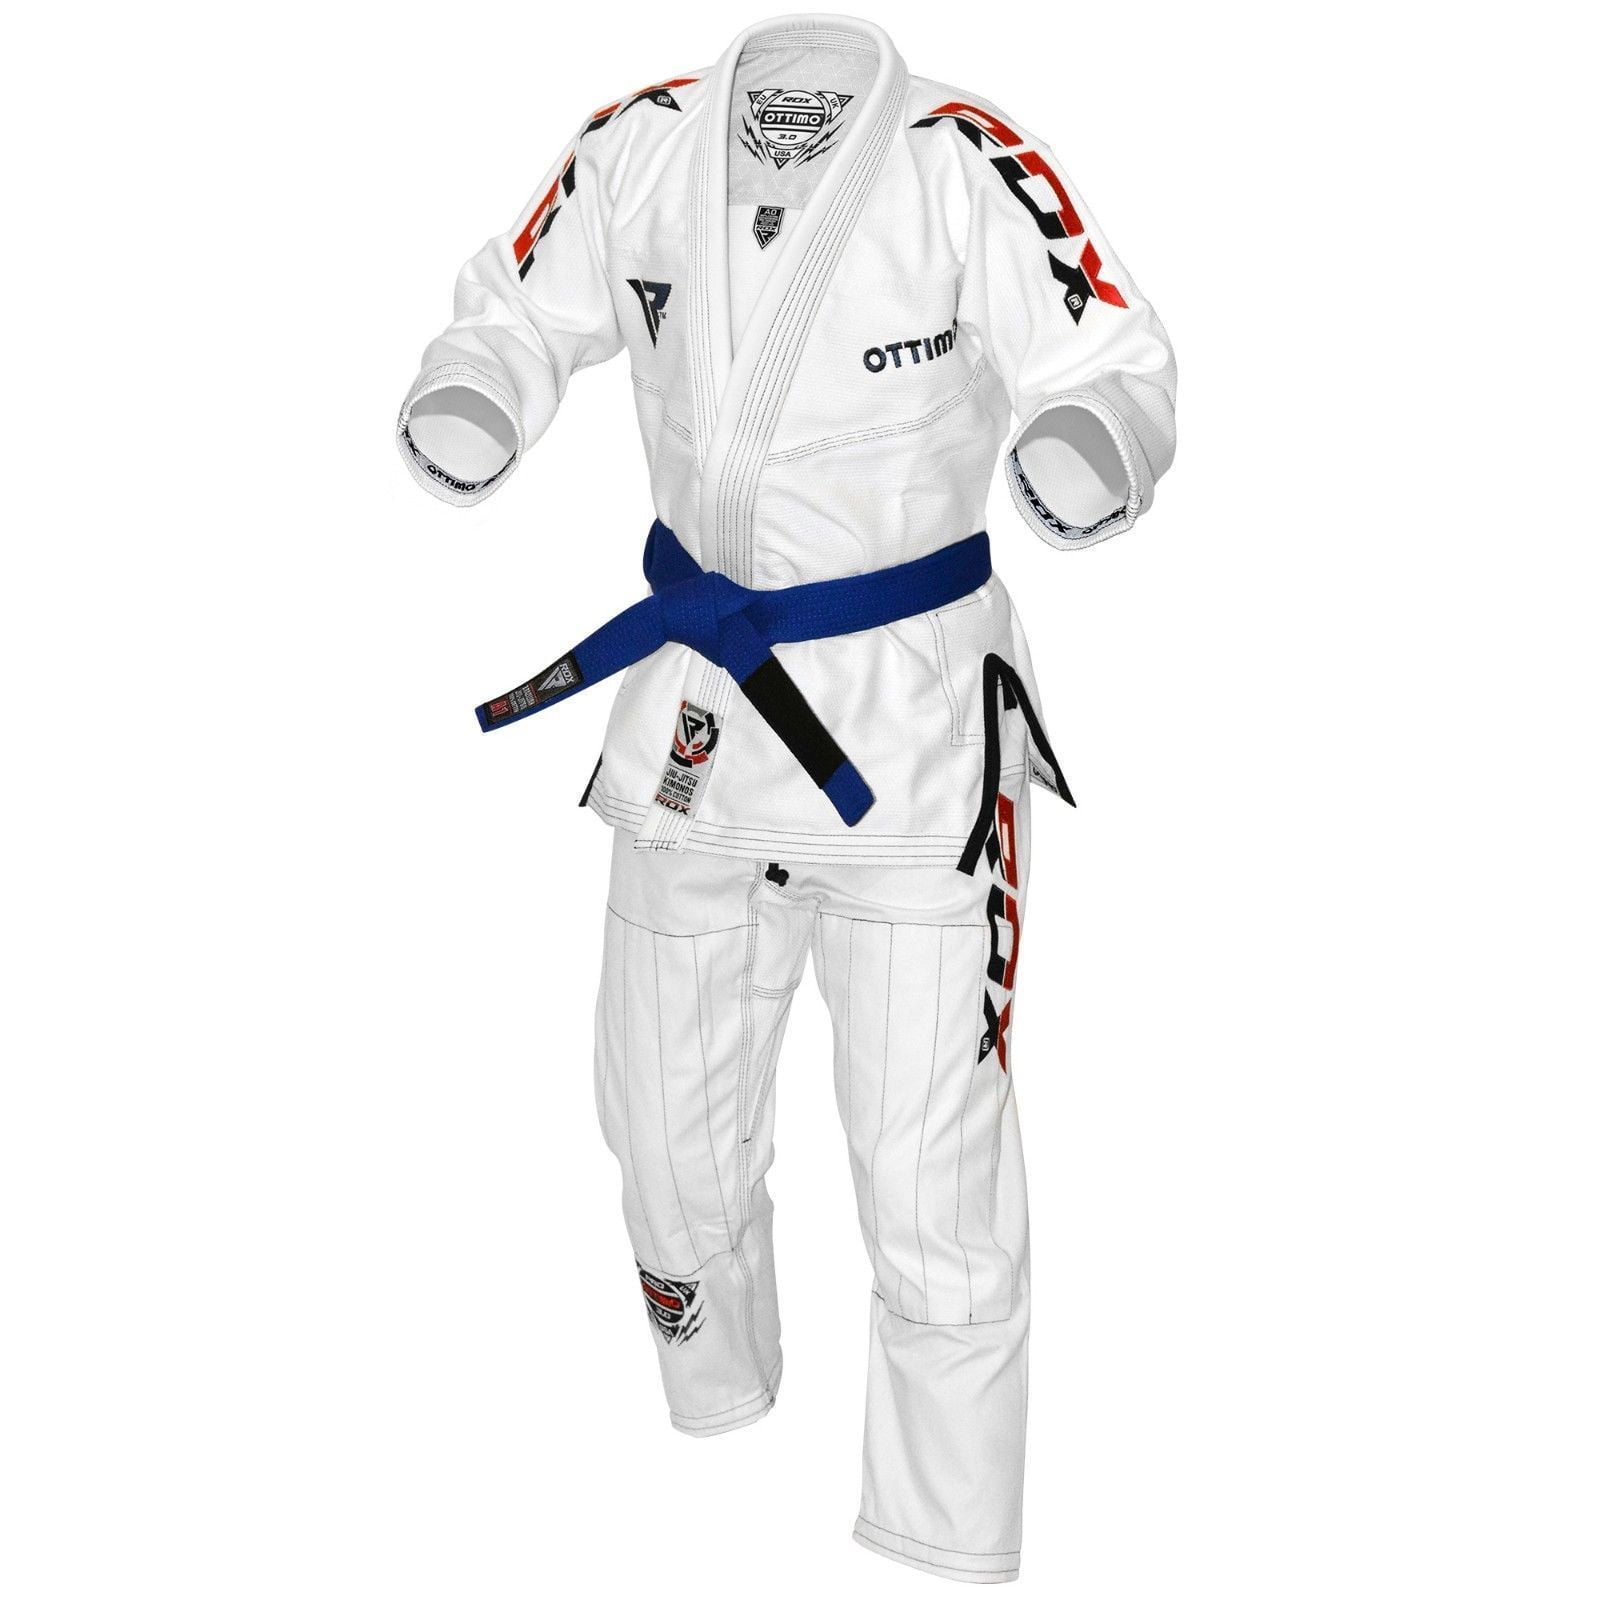 A3 Details about   FitsT4 Brazilian Jiu Jitsu Gi Ultra Light Grappling Gi Uniform White 